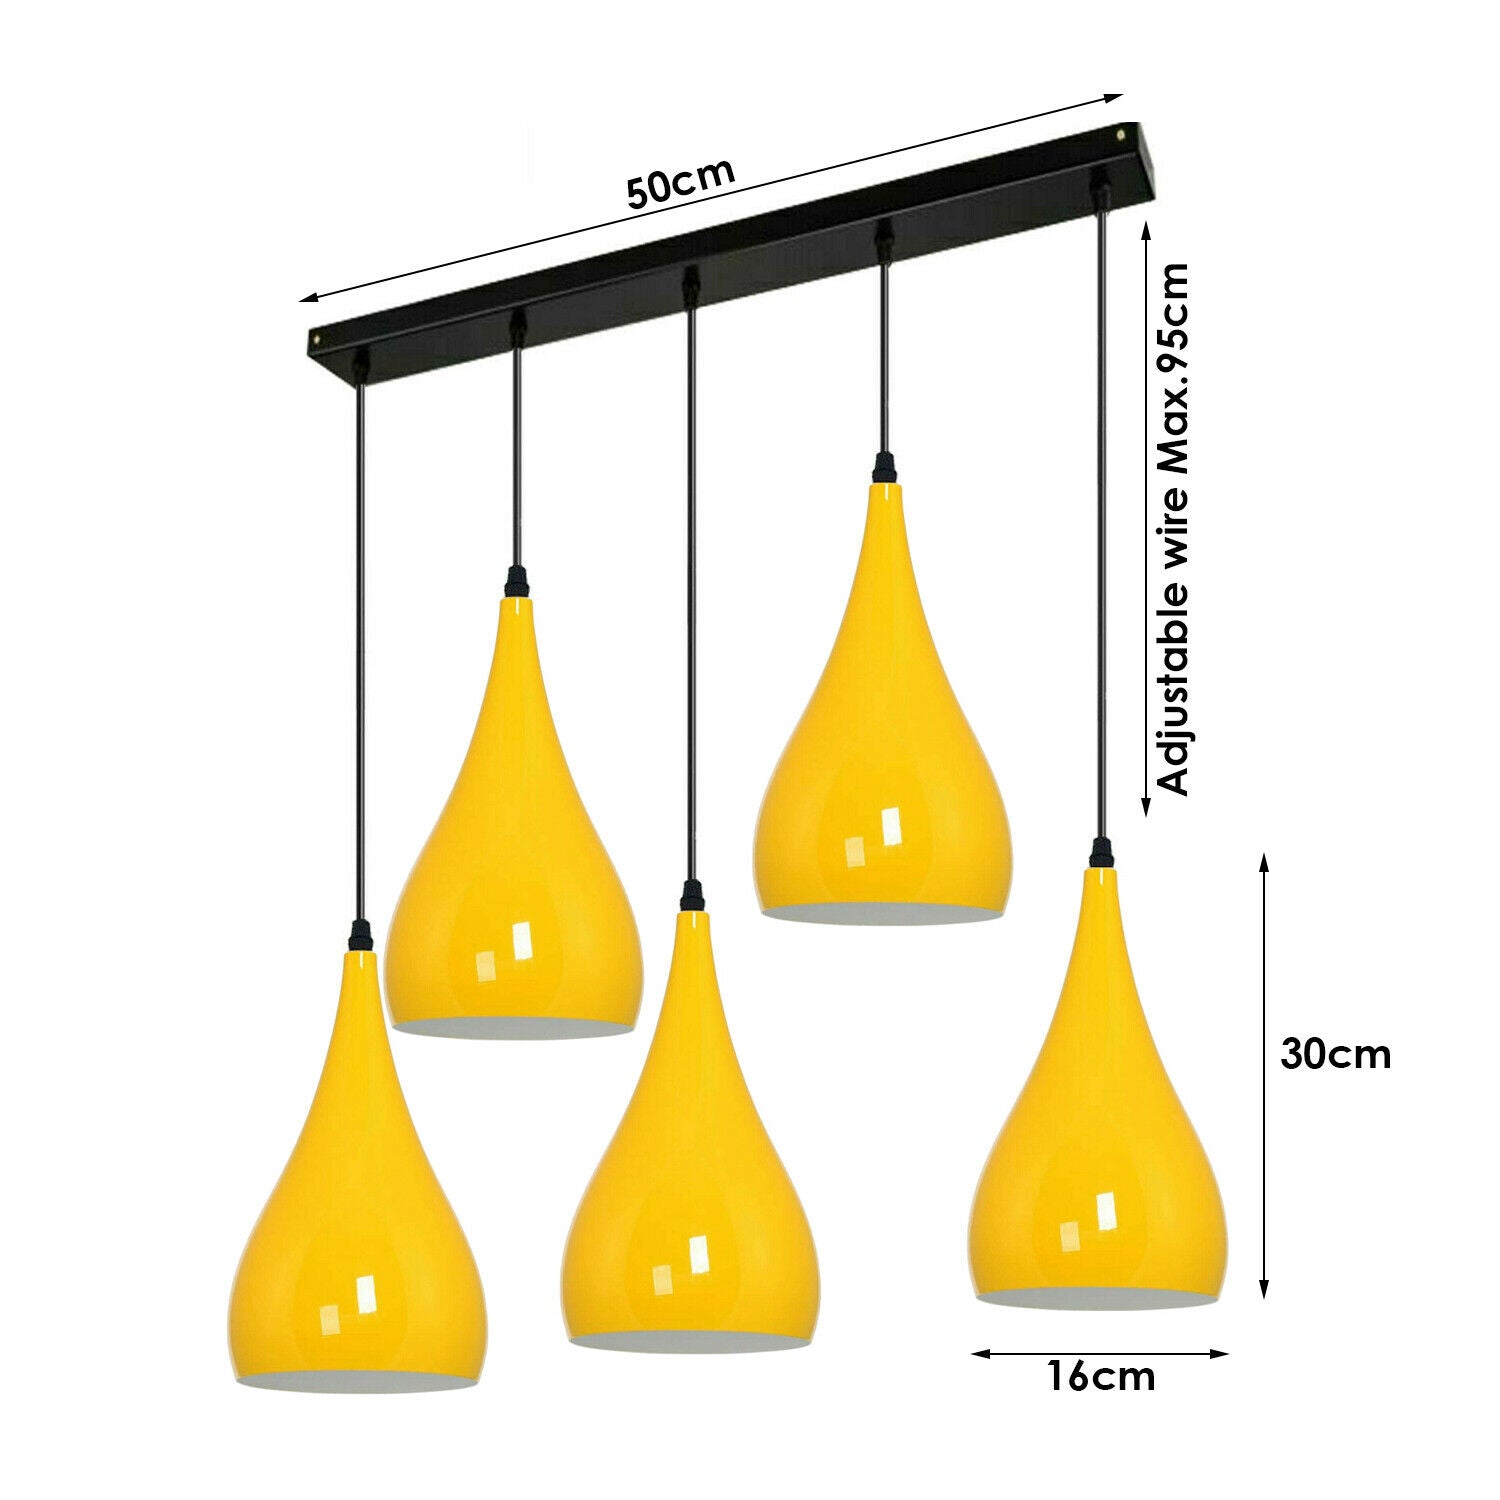 Yellow 5 Outlet Ceiling Light Fixtures Black Hanging Pendant Lighting~1624 - LEDSone UK Ltd